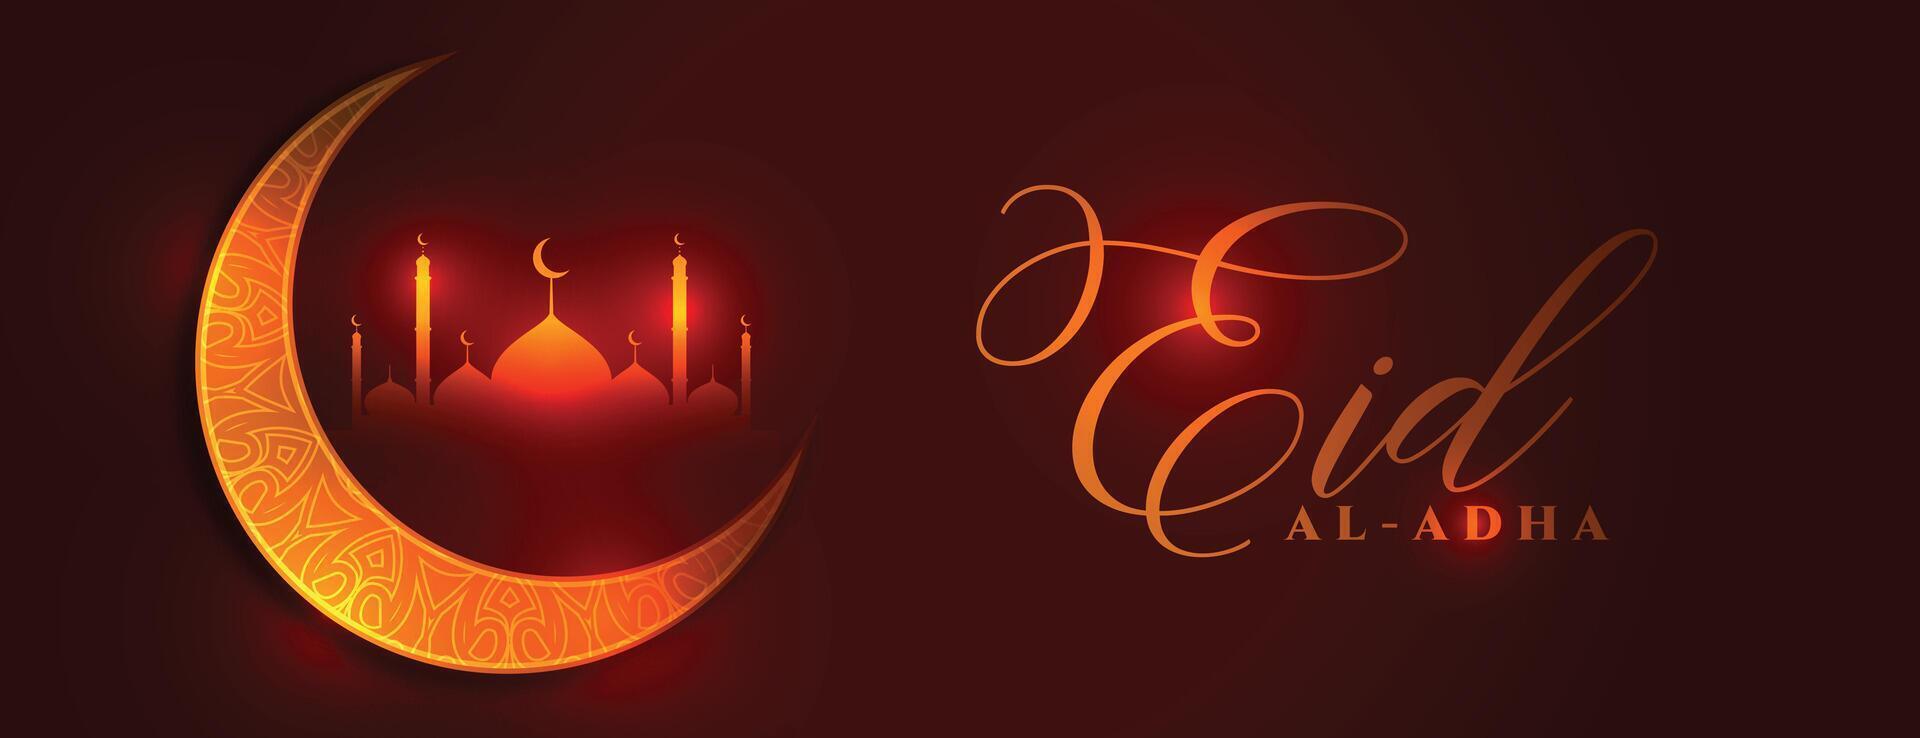 eid al Adha muslim festival röd skinande baner vektor